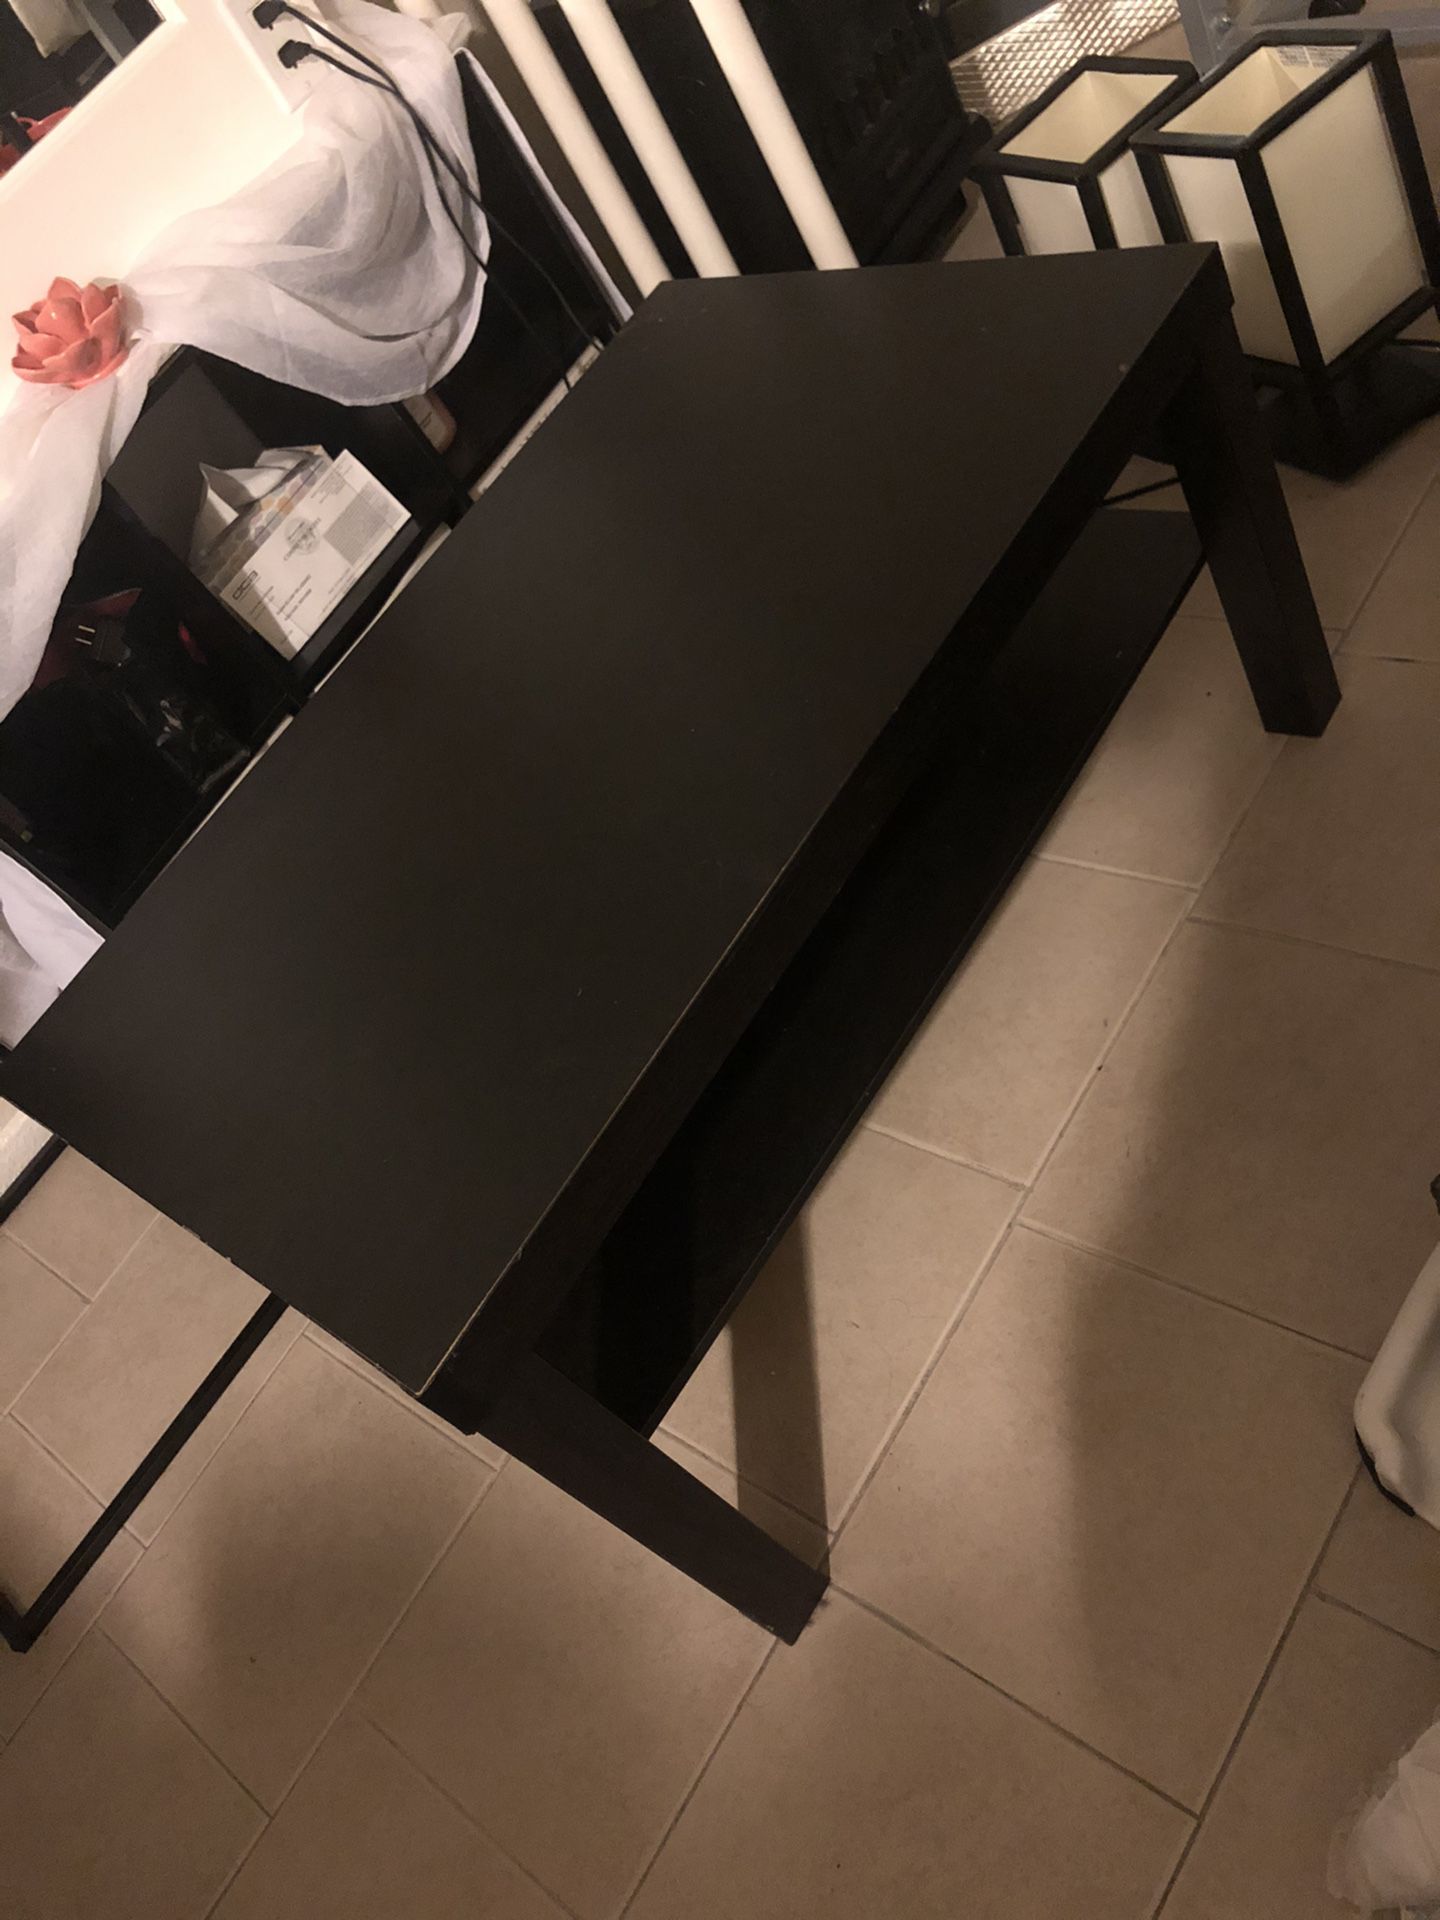 IKEA black coffee table